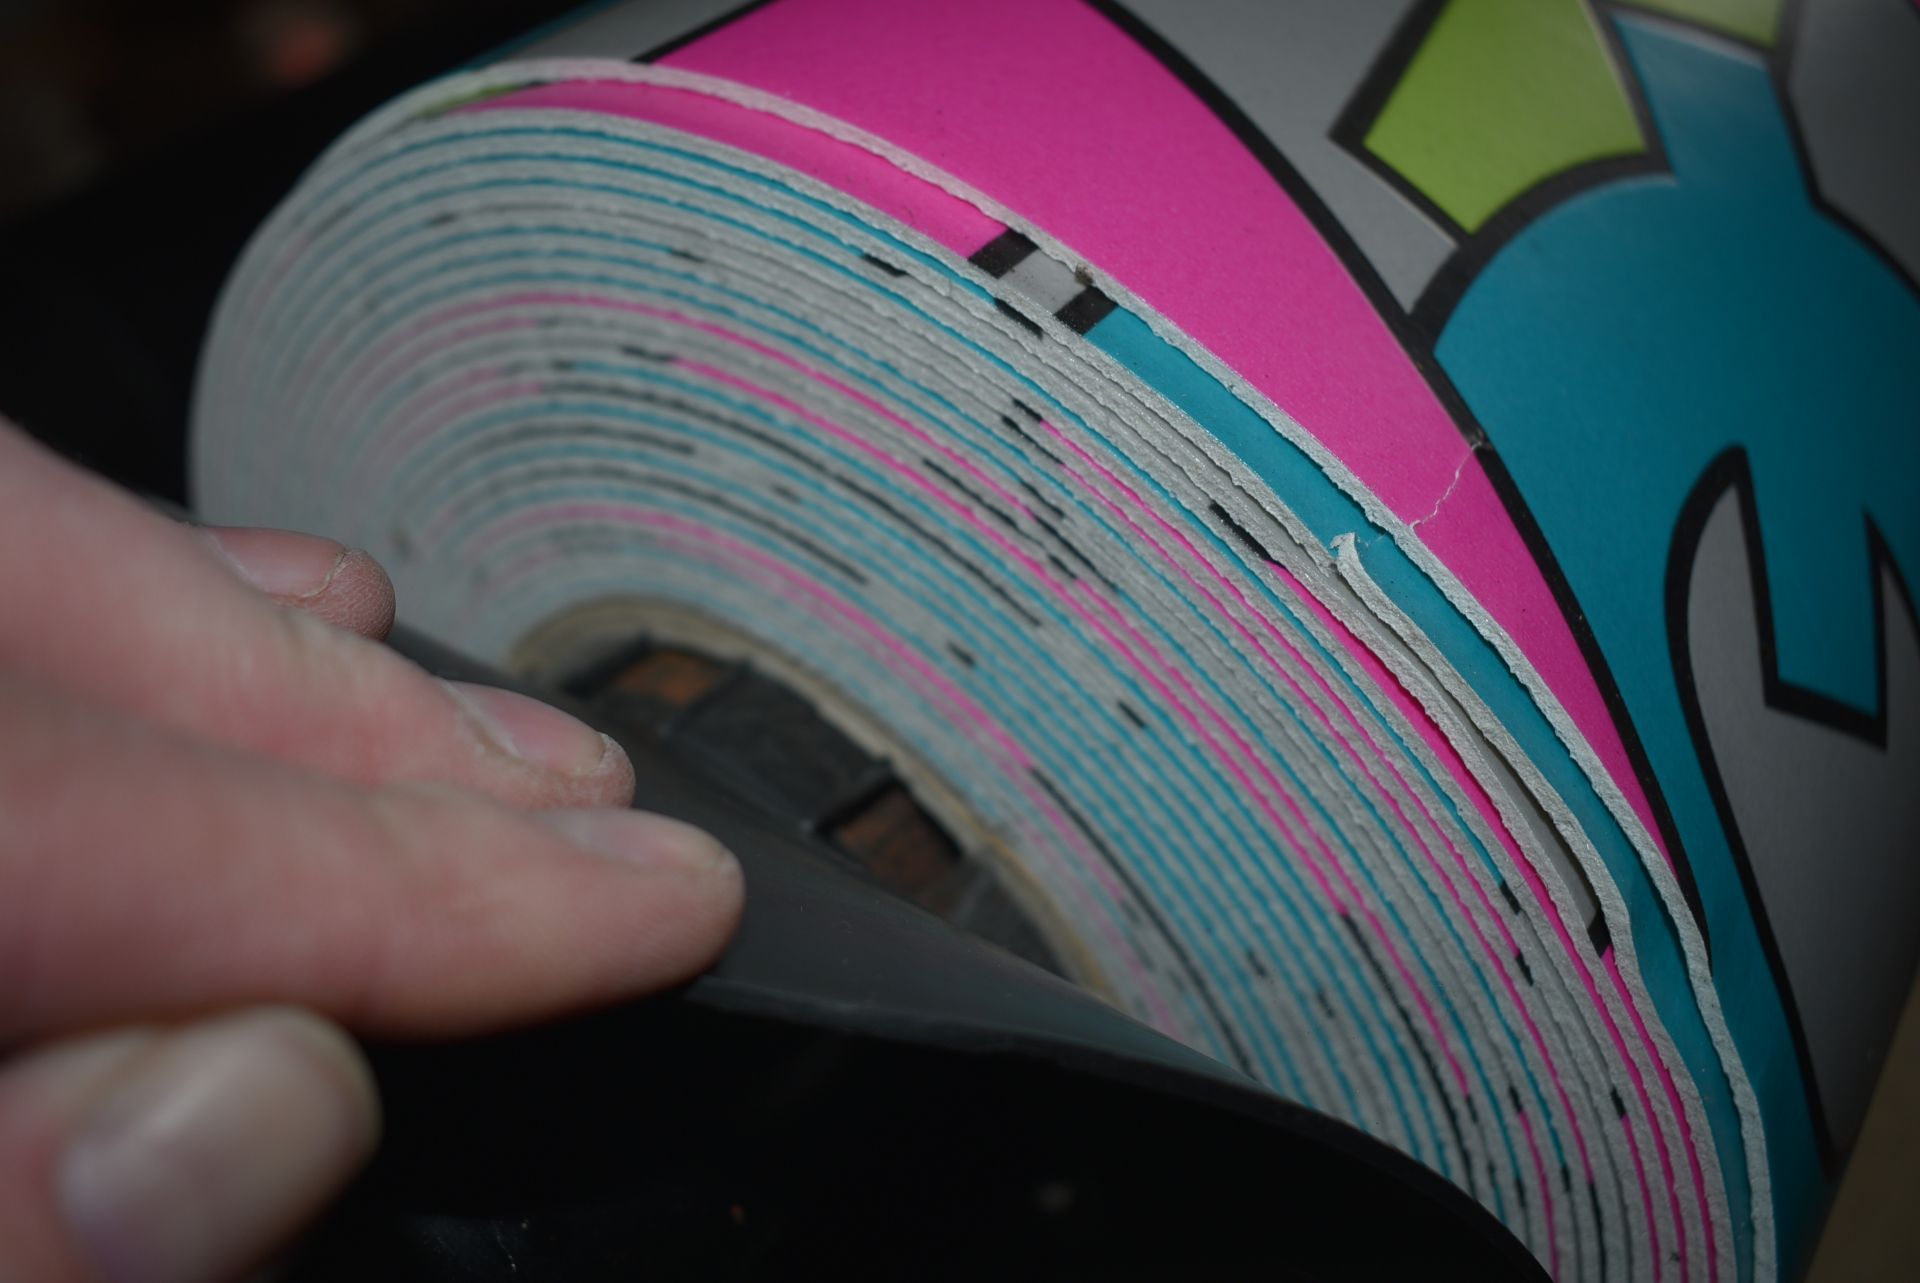 4m wide Roll of Multicolour Alphabet Vinyl Flooring - Image 2 of 2